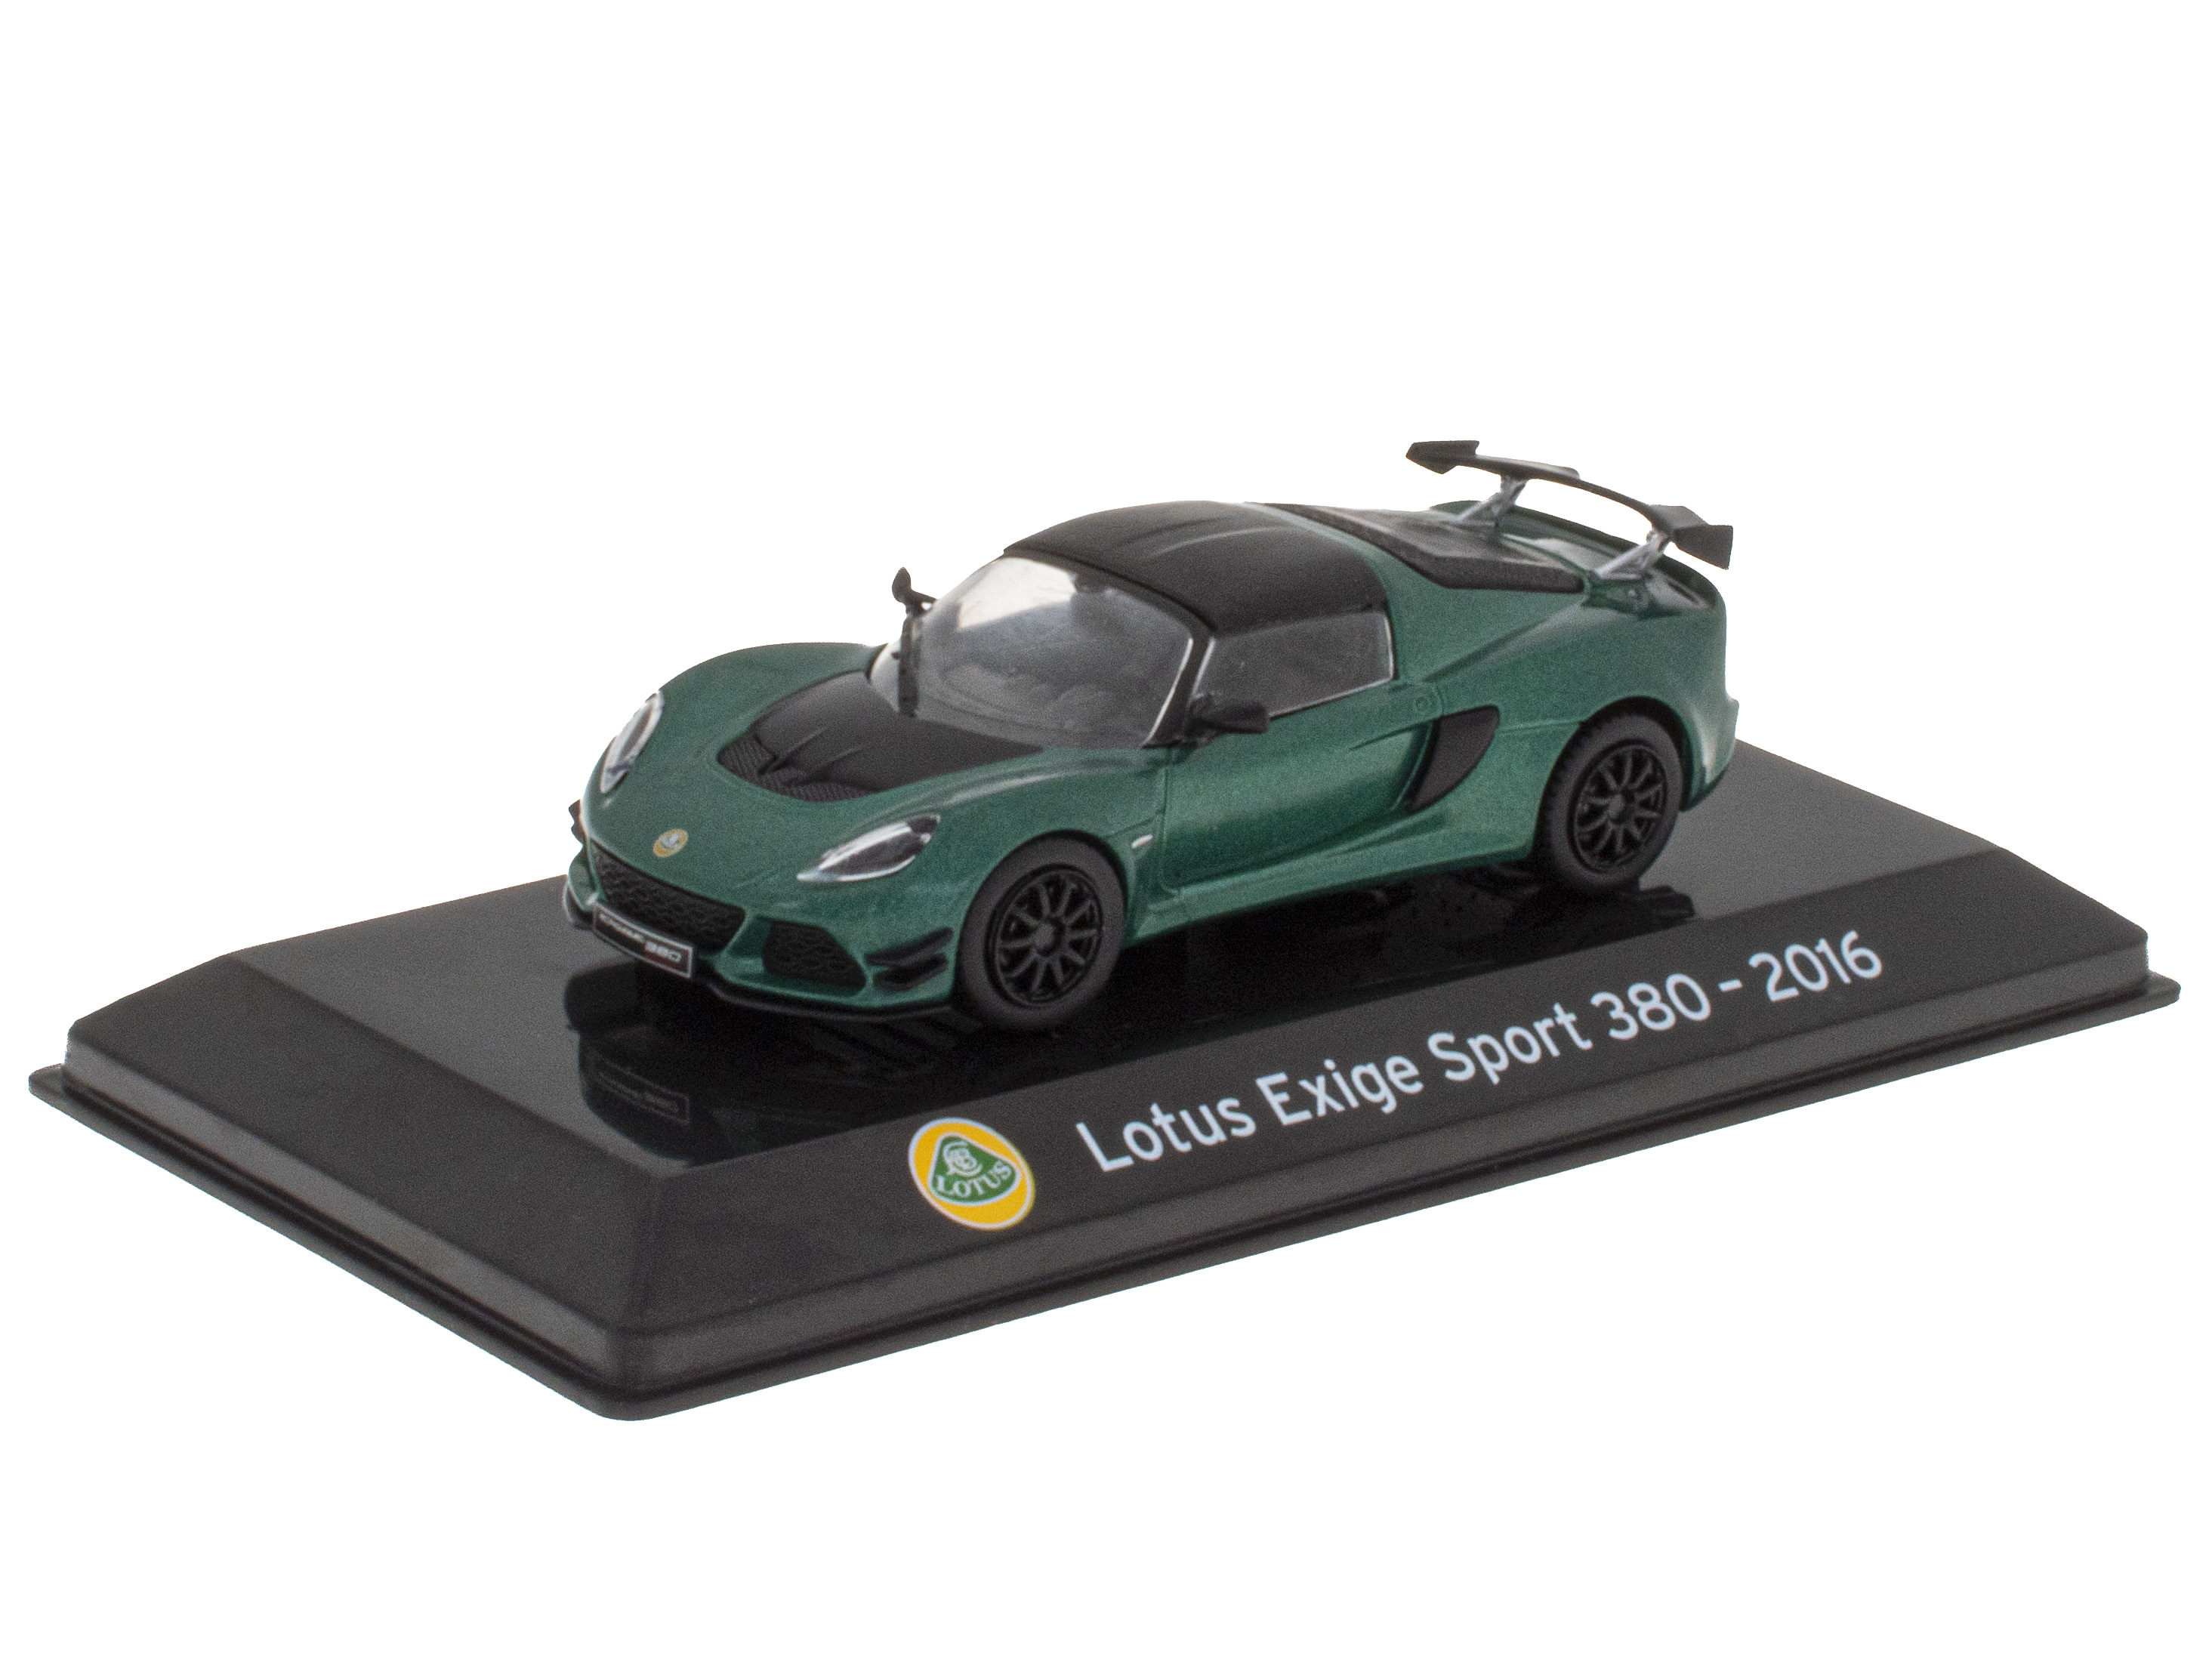 Lotus Exige Sport 380 - 2016